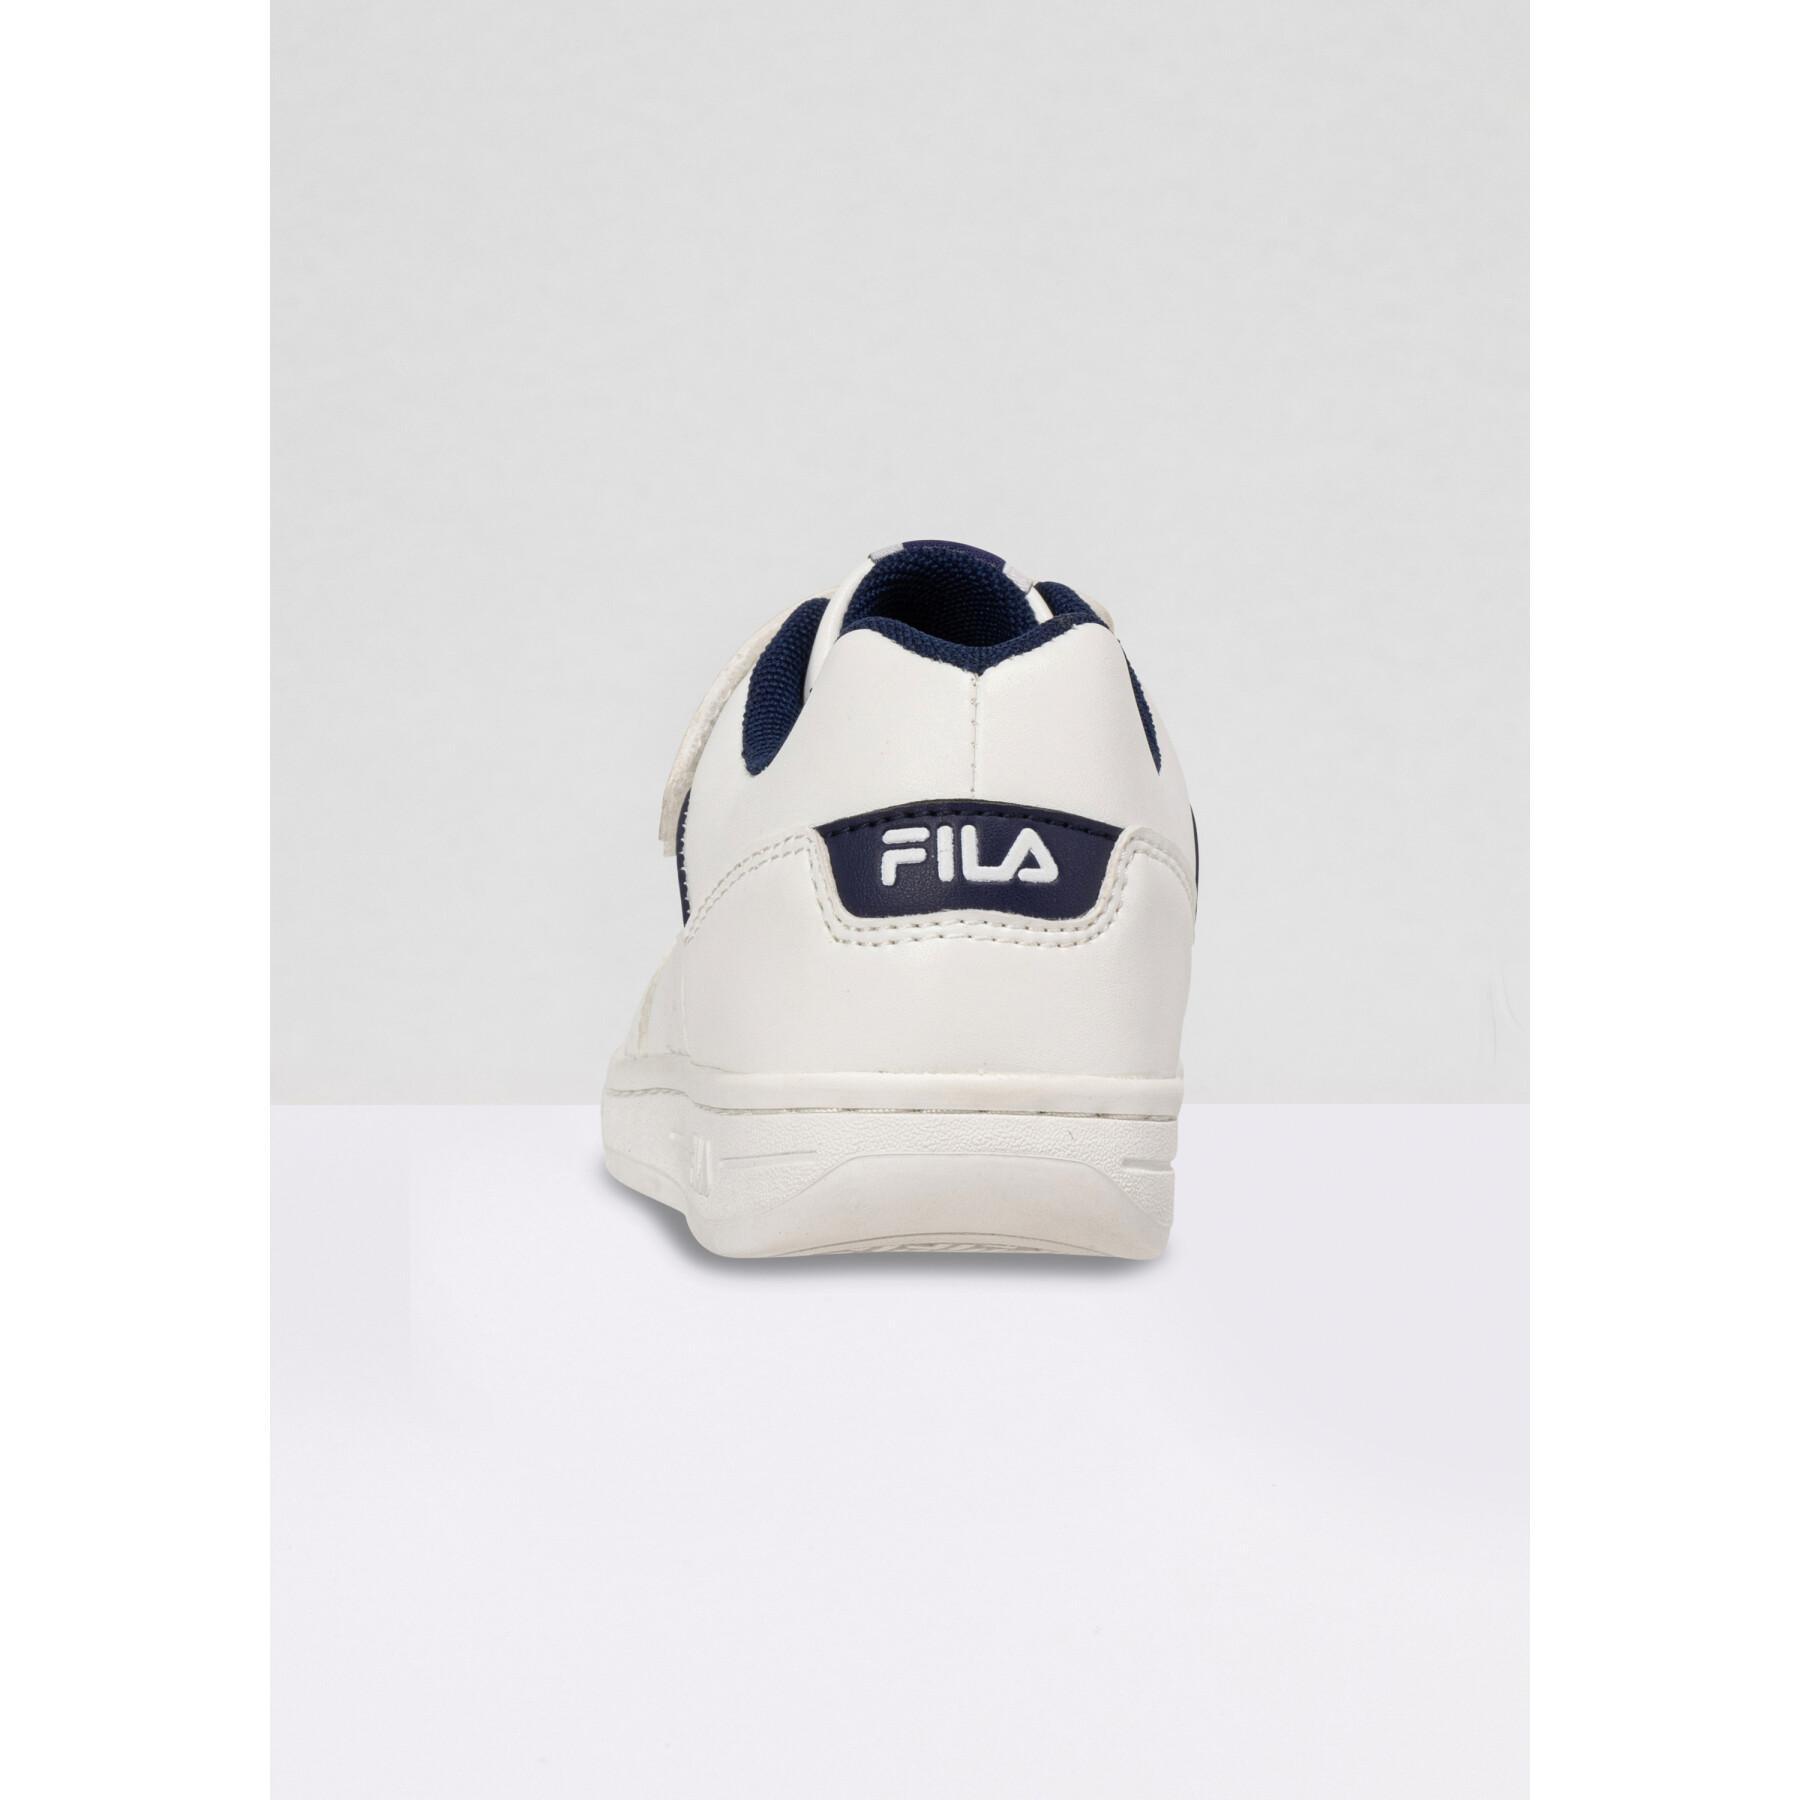 Velcro sneakers for kids Fila C.Court - Brands - Sneakers